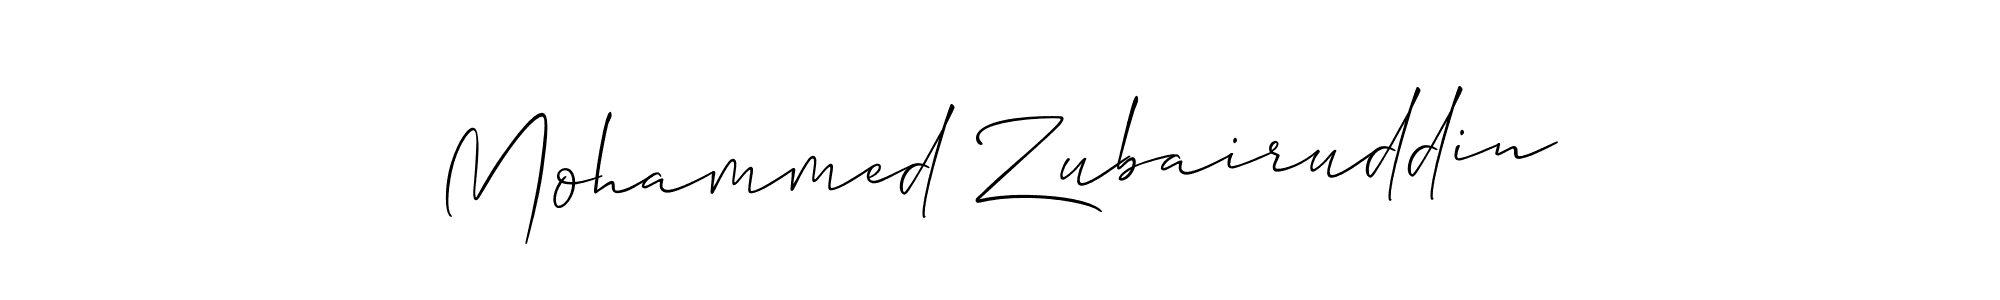 How to Draw Mohammed Zubairuddin signature style? Allison_Script is a latest design signature styles for name Mohammed Zubairuddin. Mohammed Zubairuddin signature style 2 images and pictures png